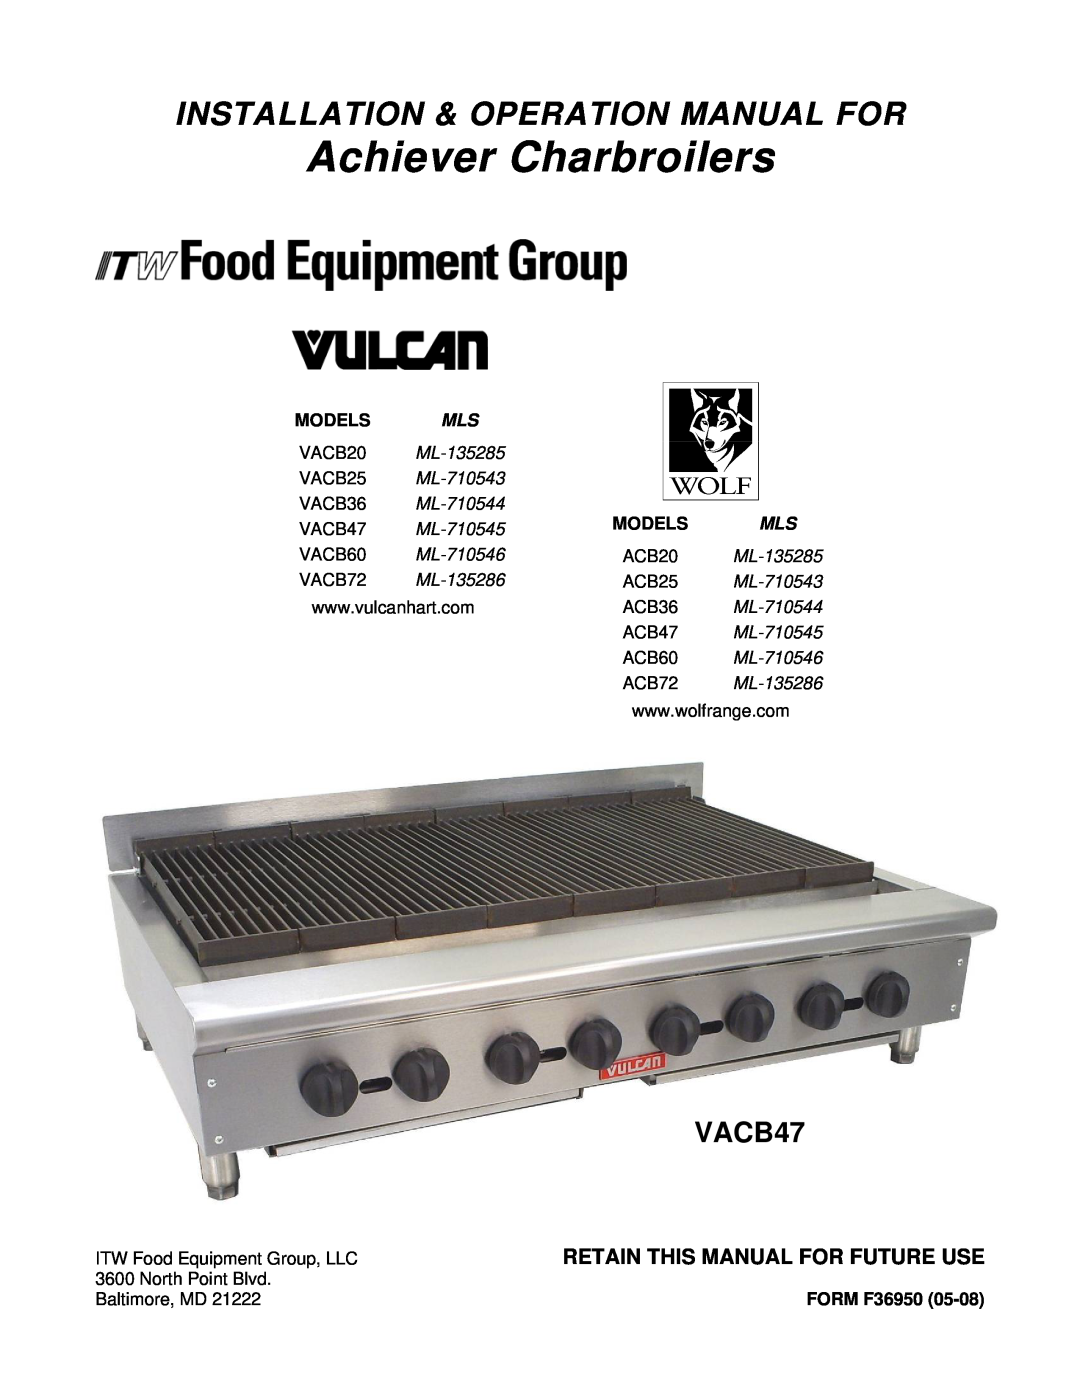 Vulcan-Hart VACB72, VACB25 operation manual Achiever Charbroilers, Installation & Operation Manual For, VACB47, Models 